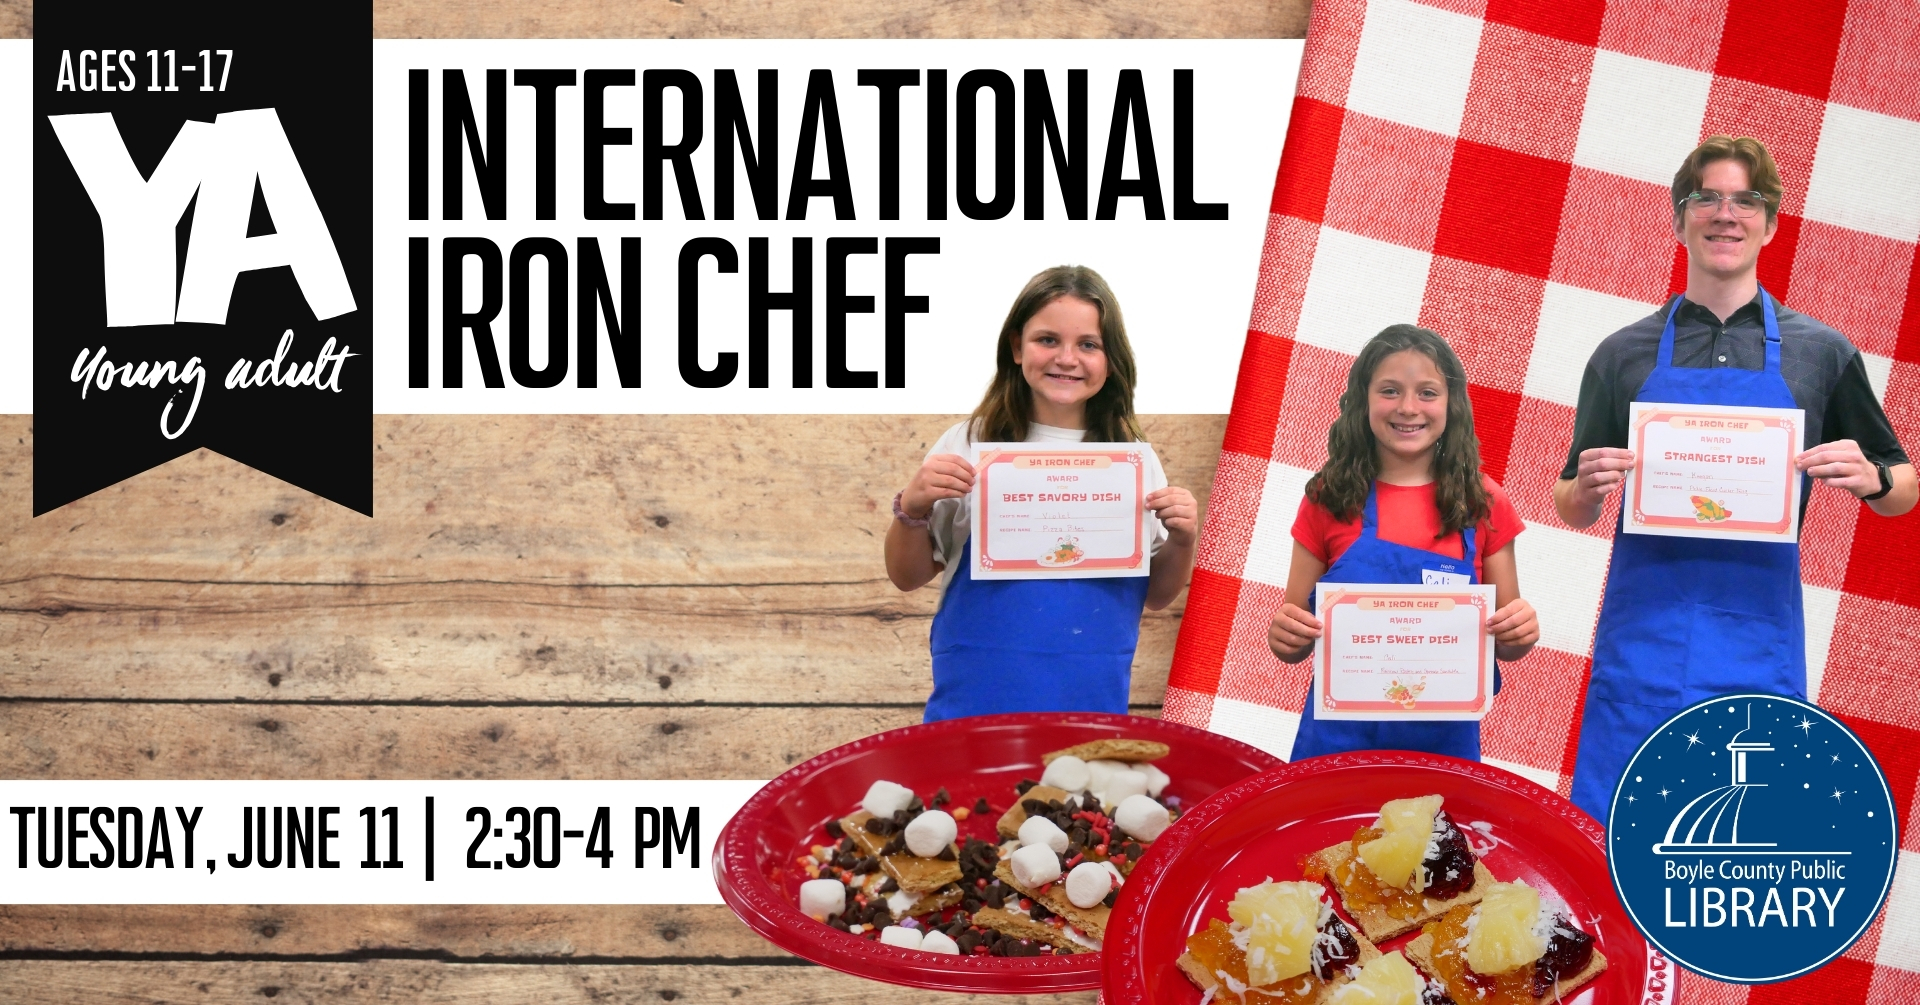 YA International Iron Chef Poster